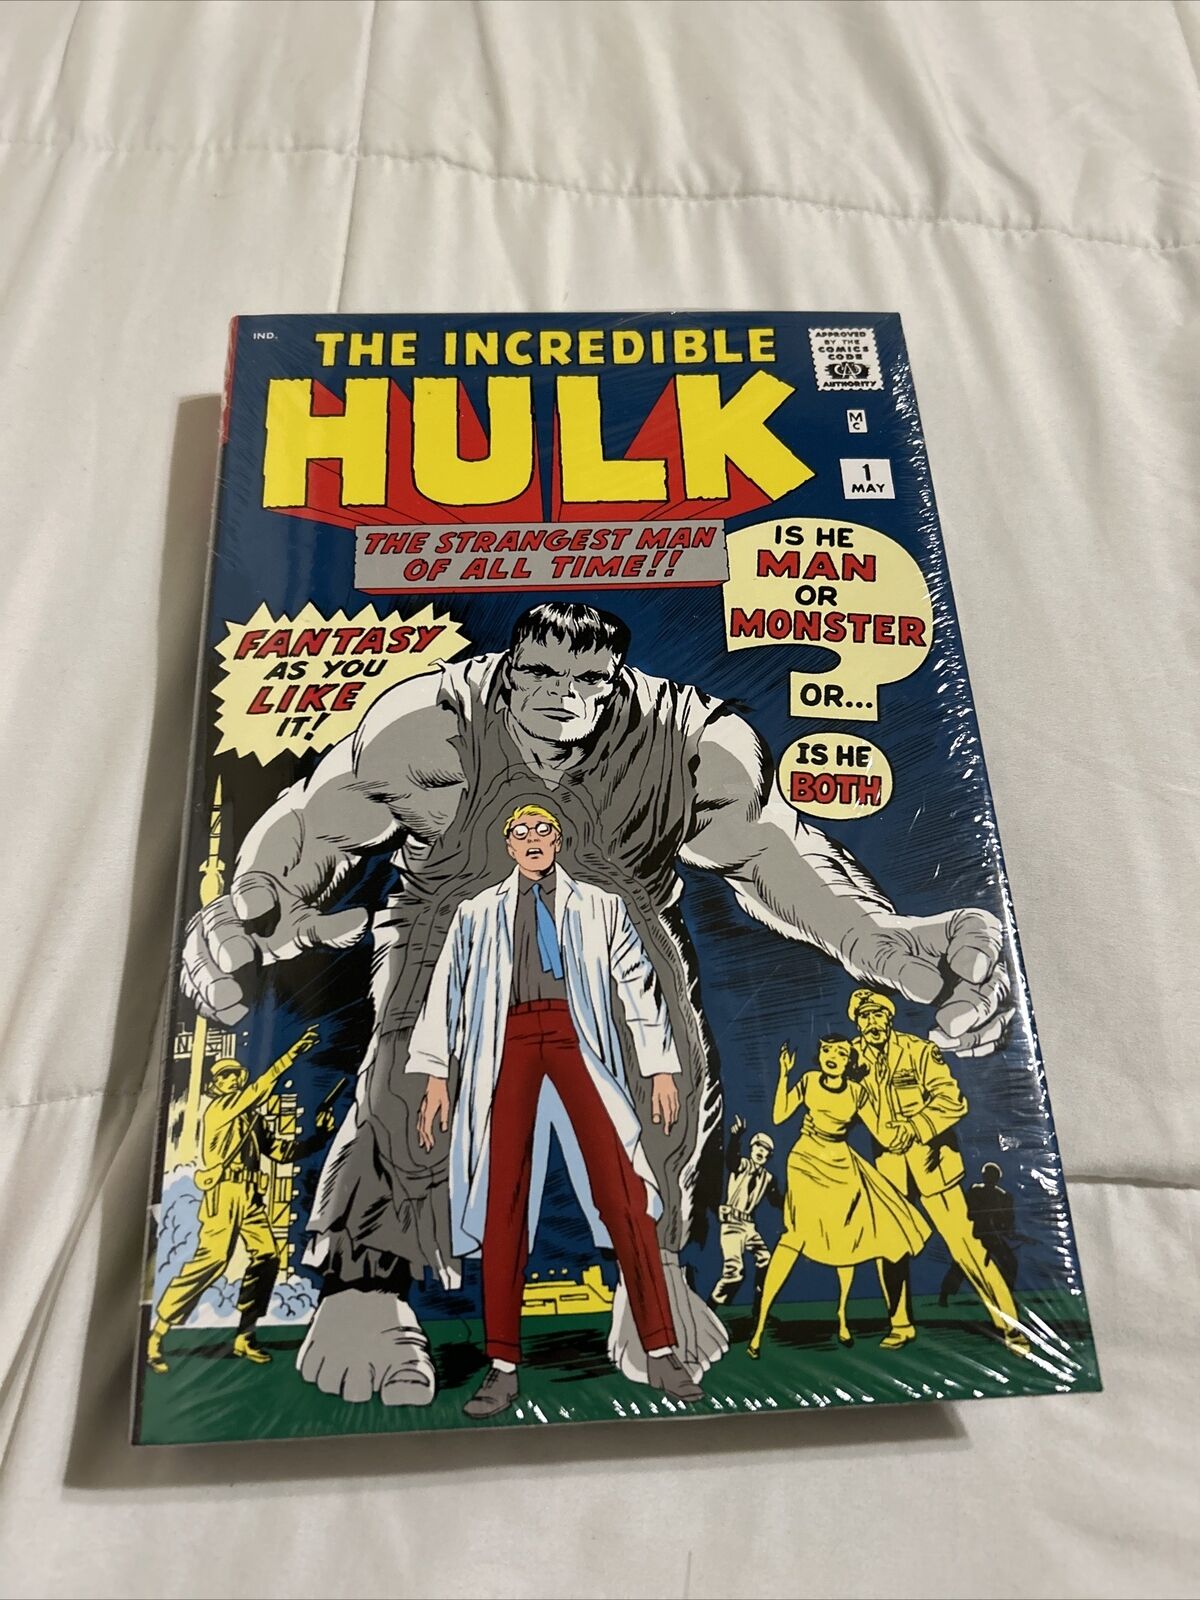 The Incredible Hulk Omnibus vol 1 by Stan Lee and Jack Kirby 